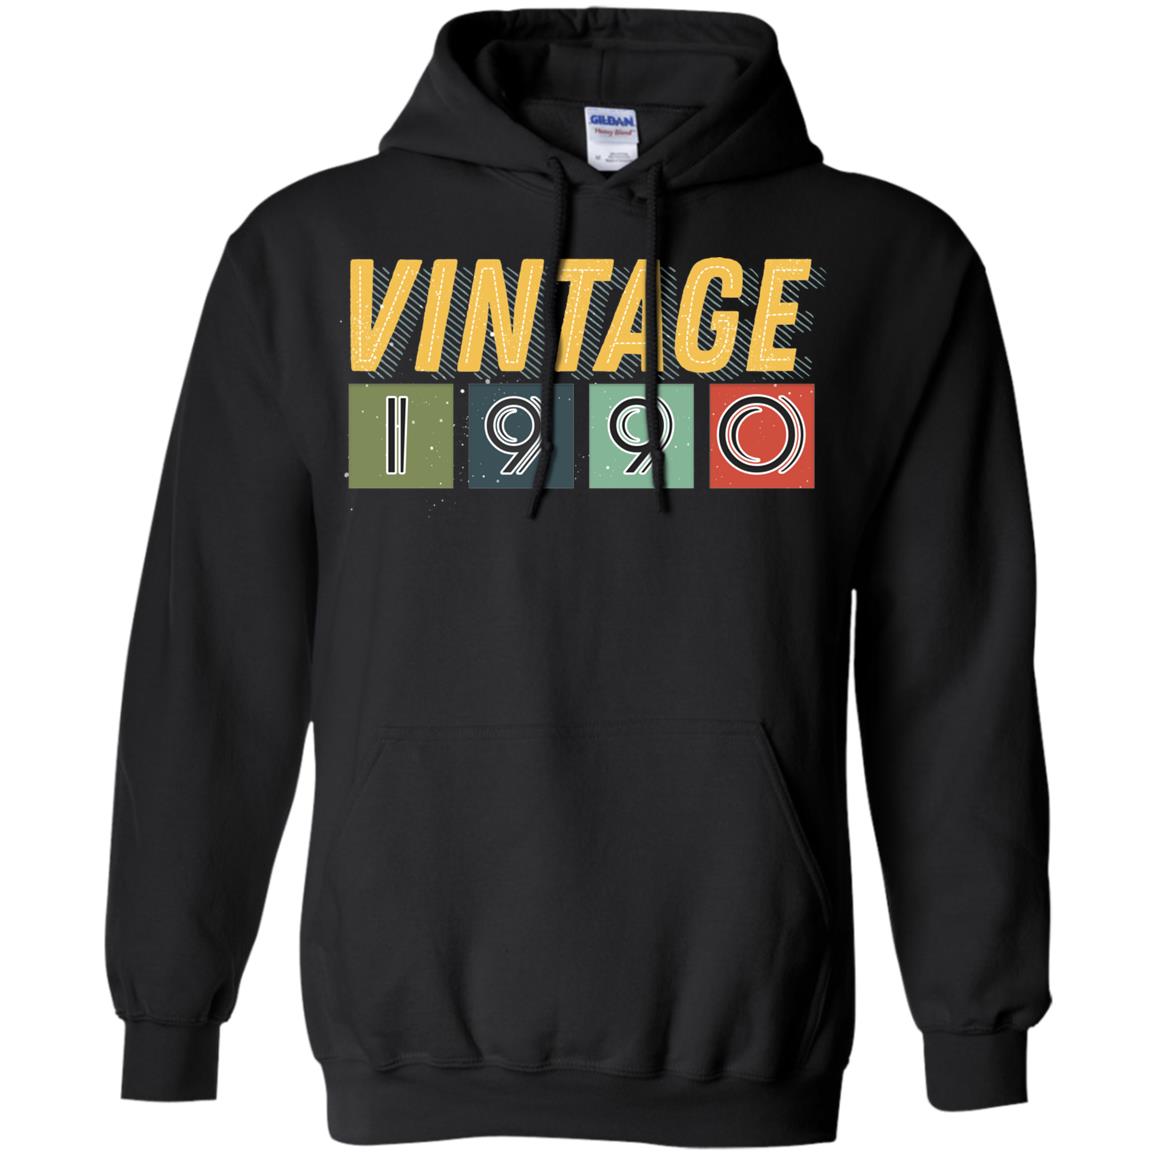 Vintage 1990 28th Birthday Gift Shirt For Mens Or WomensG185 Gildan Pullover Hoodie 8 oz.